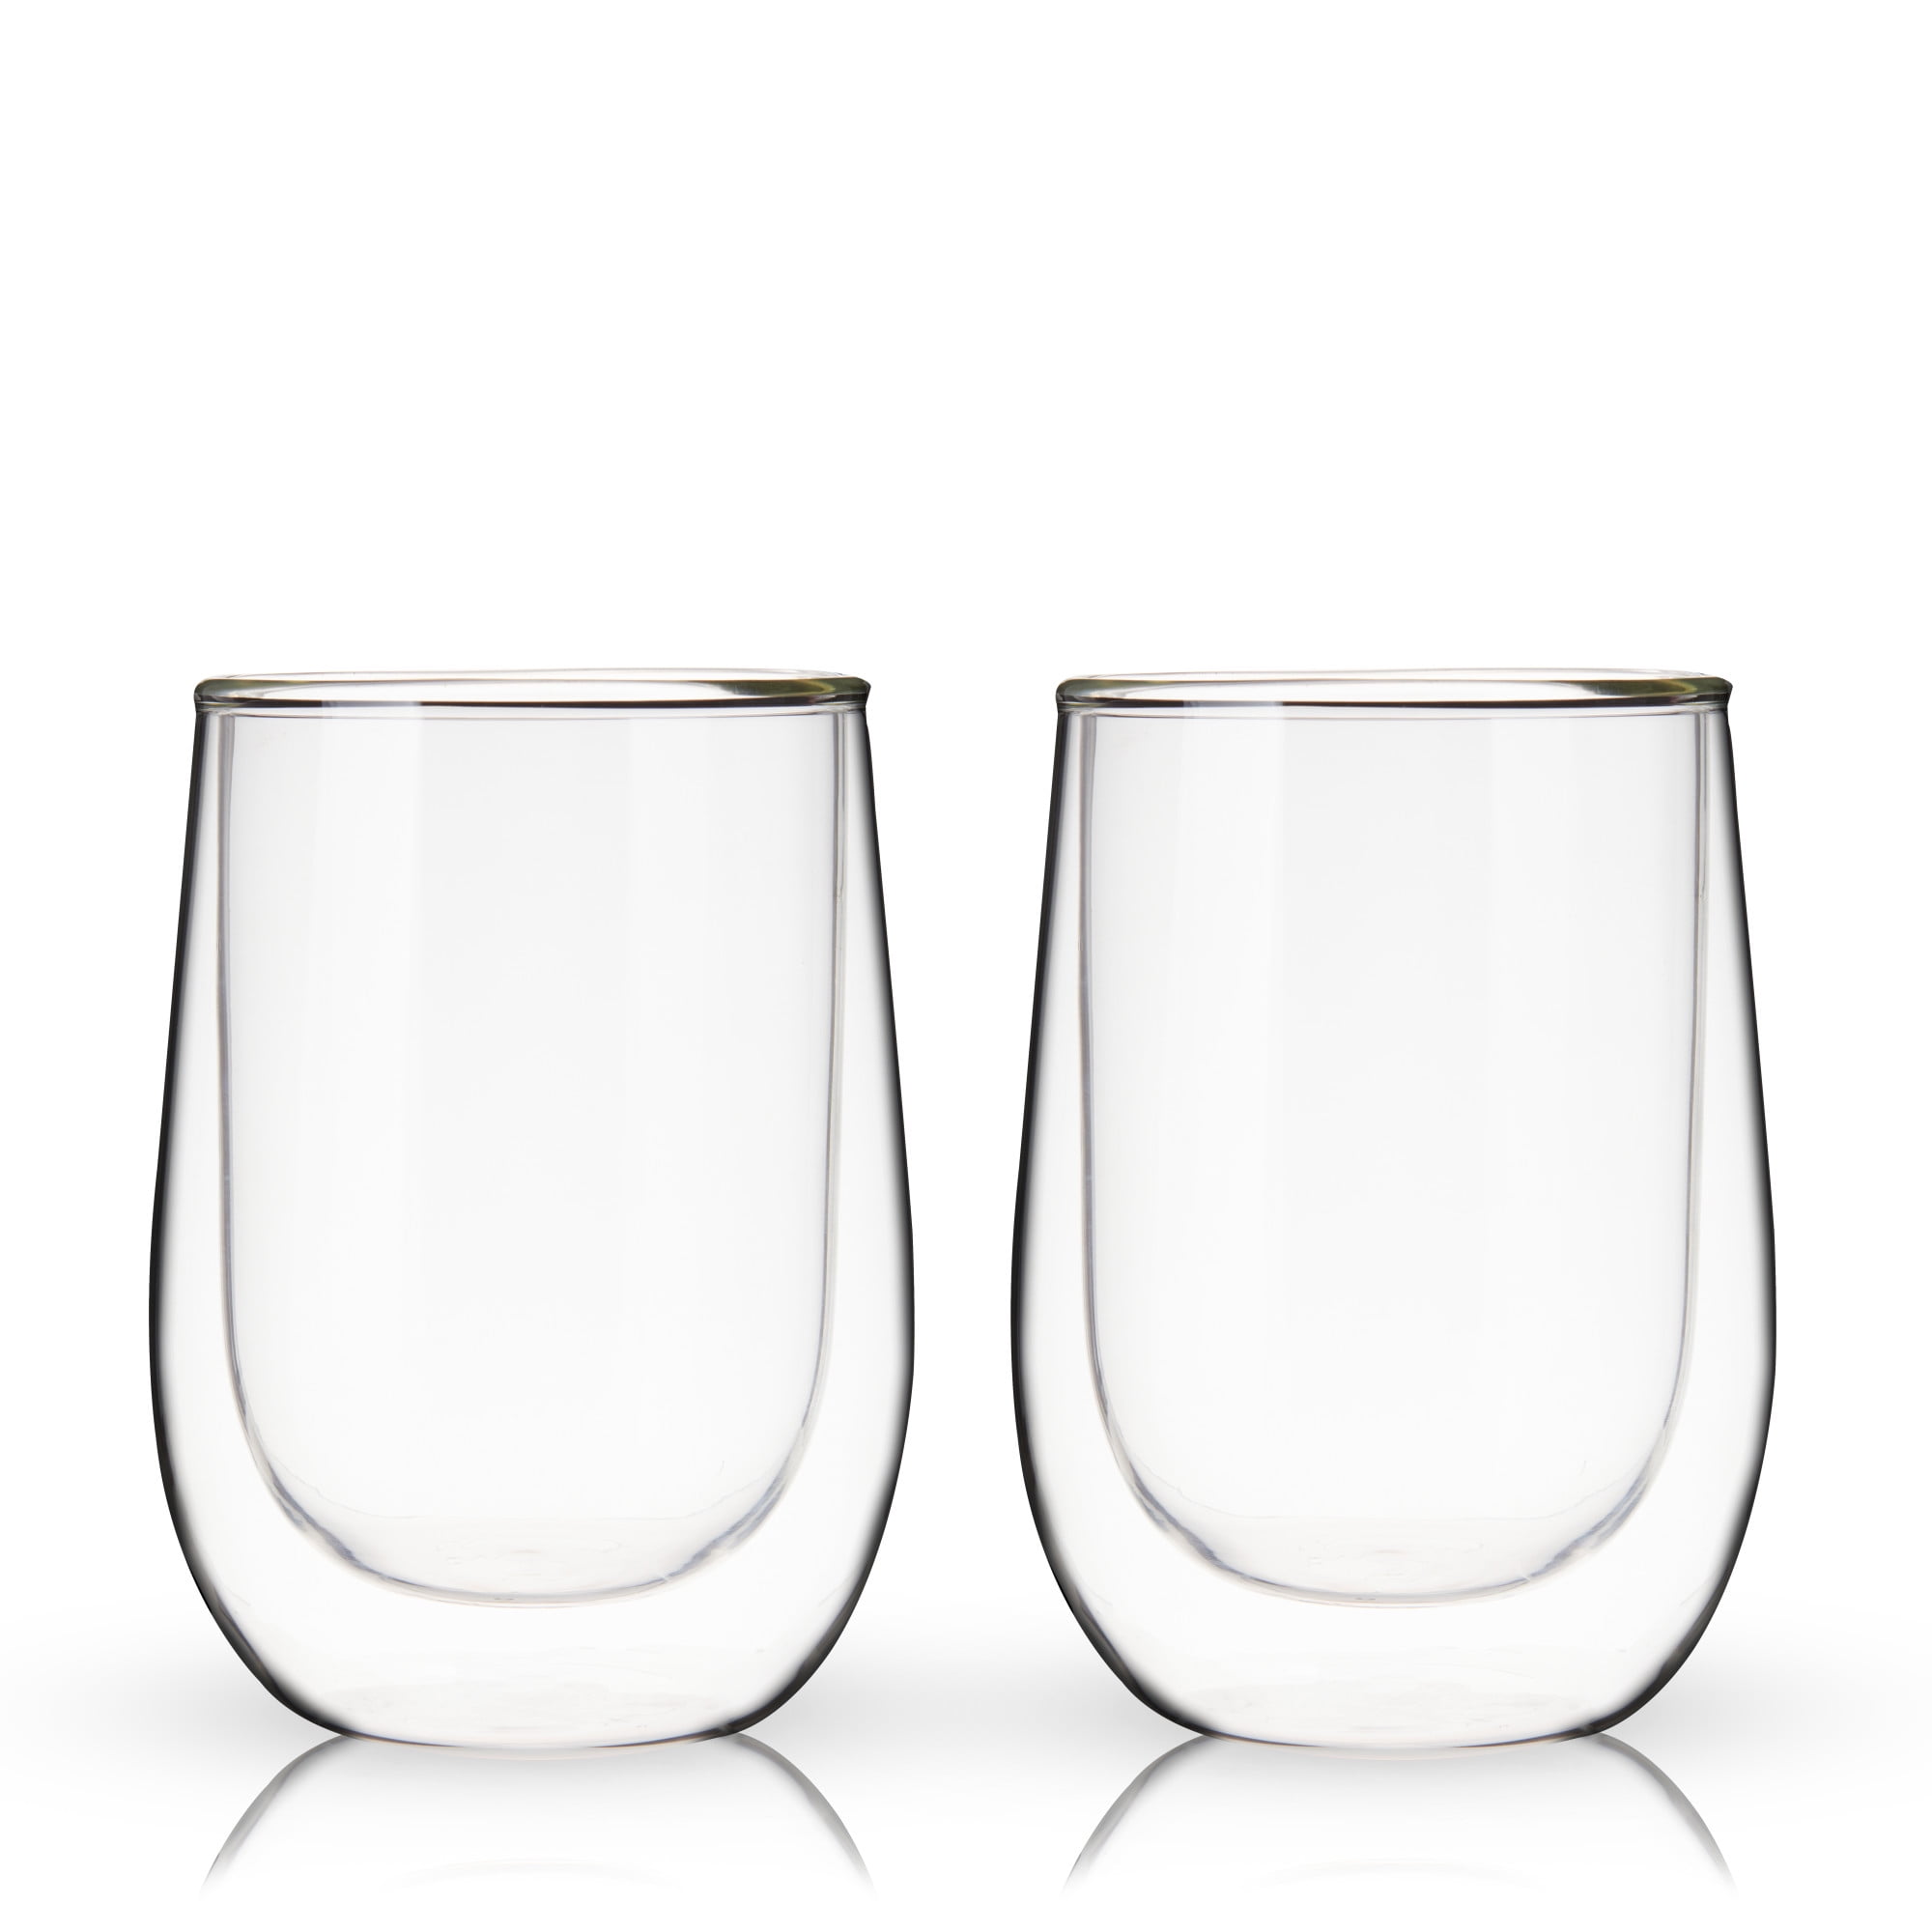 Tokyo Temptation Bordeaux Wine Glasses - Set of 2 (625 mL / 22 fl. oz.)